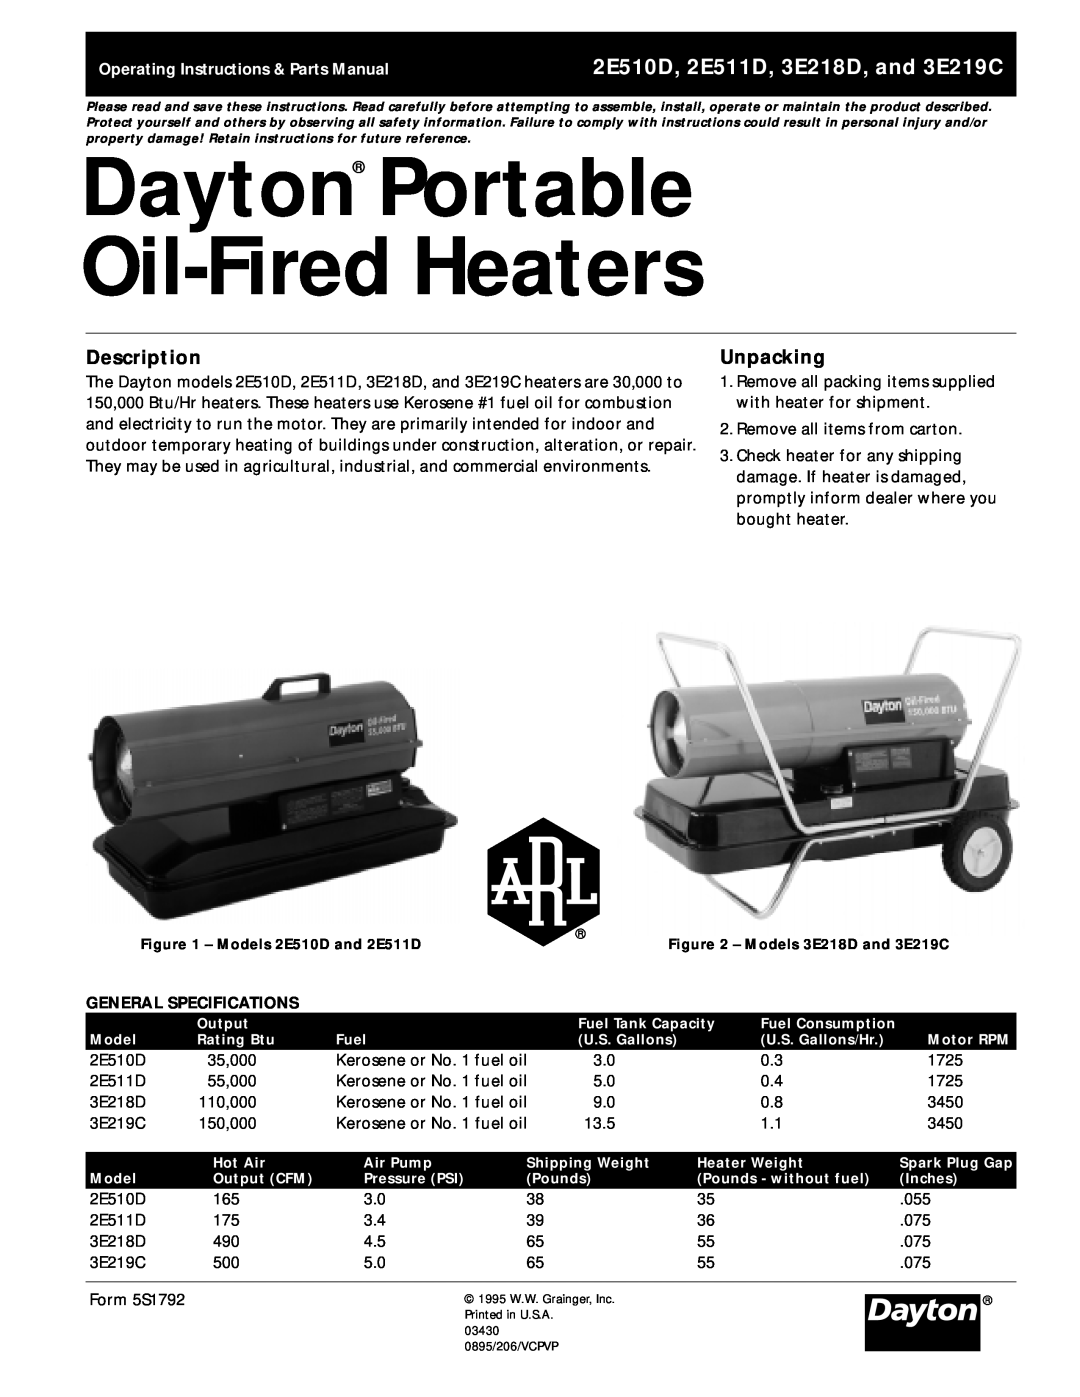 Dayton specifications Dayton Portable Oil-FiredHeaters, 2E510D, 2E511D, 3E218D, and 3E219C, Description, Unpacking 